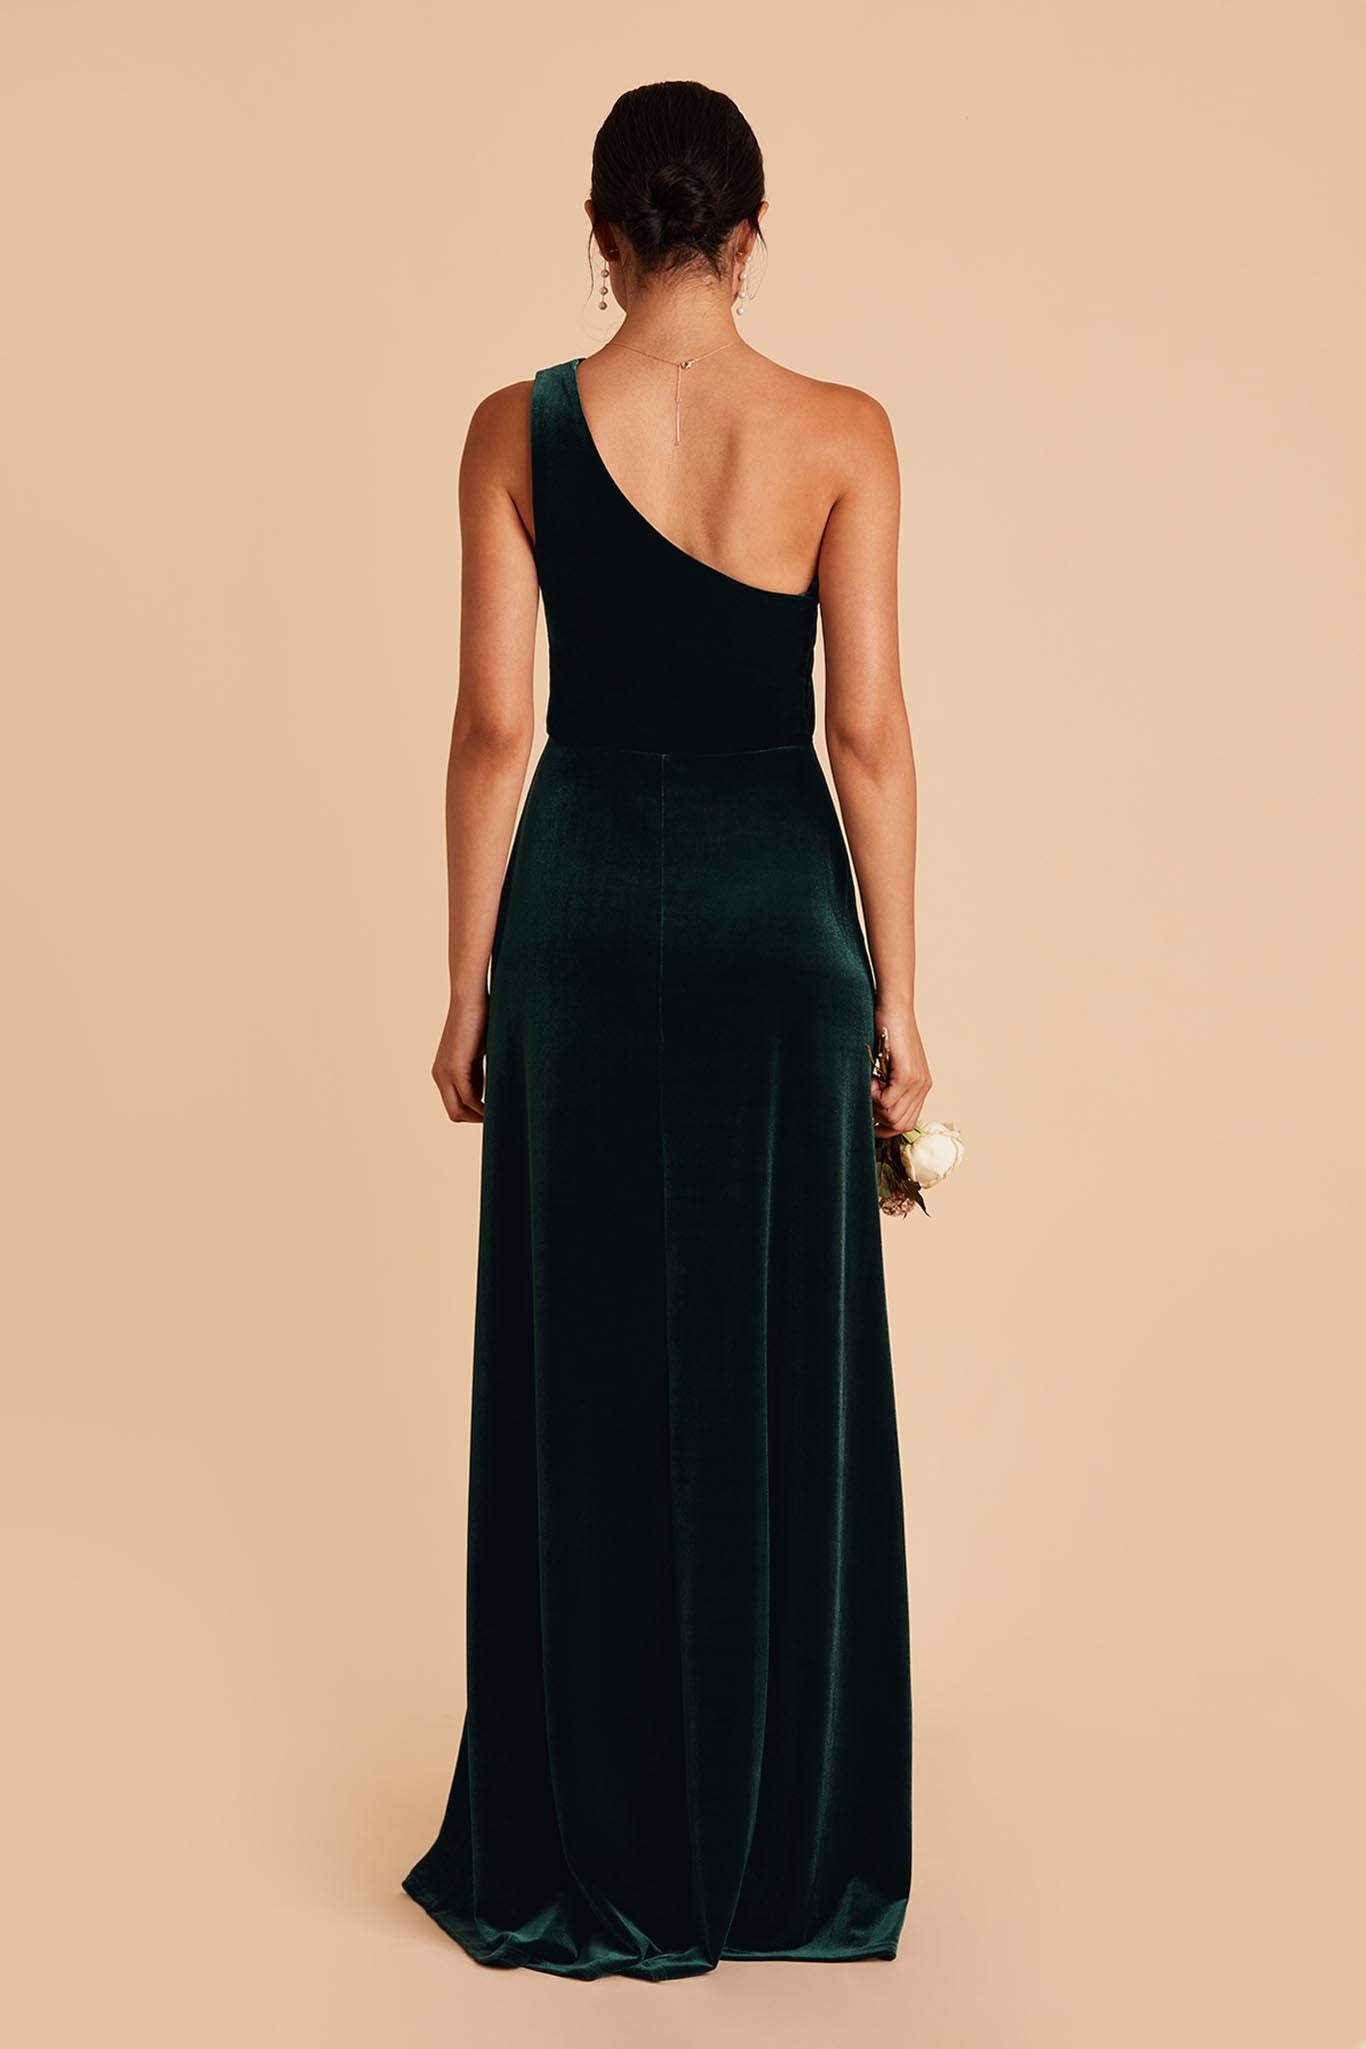 Kira Dress - Emerald Velvet Bridesmaid Dress | Birdy Grey